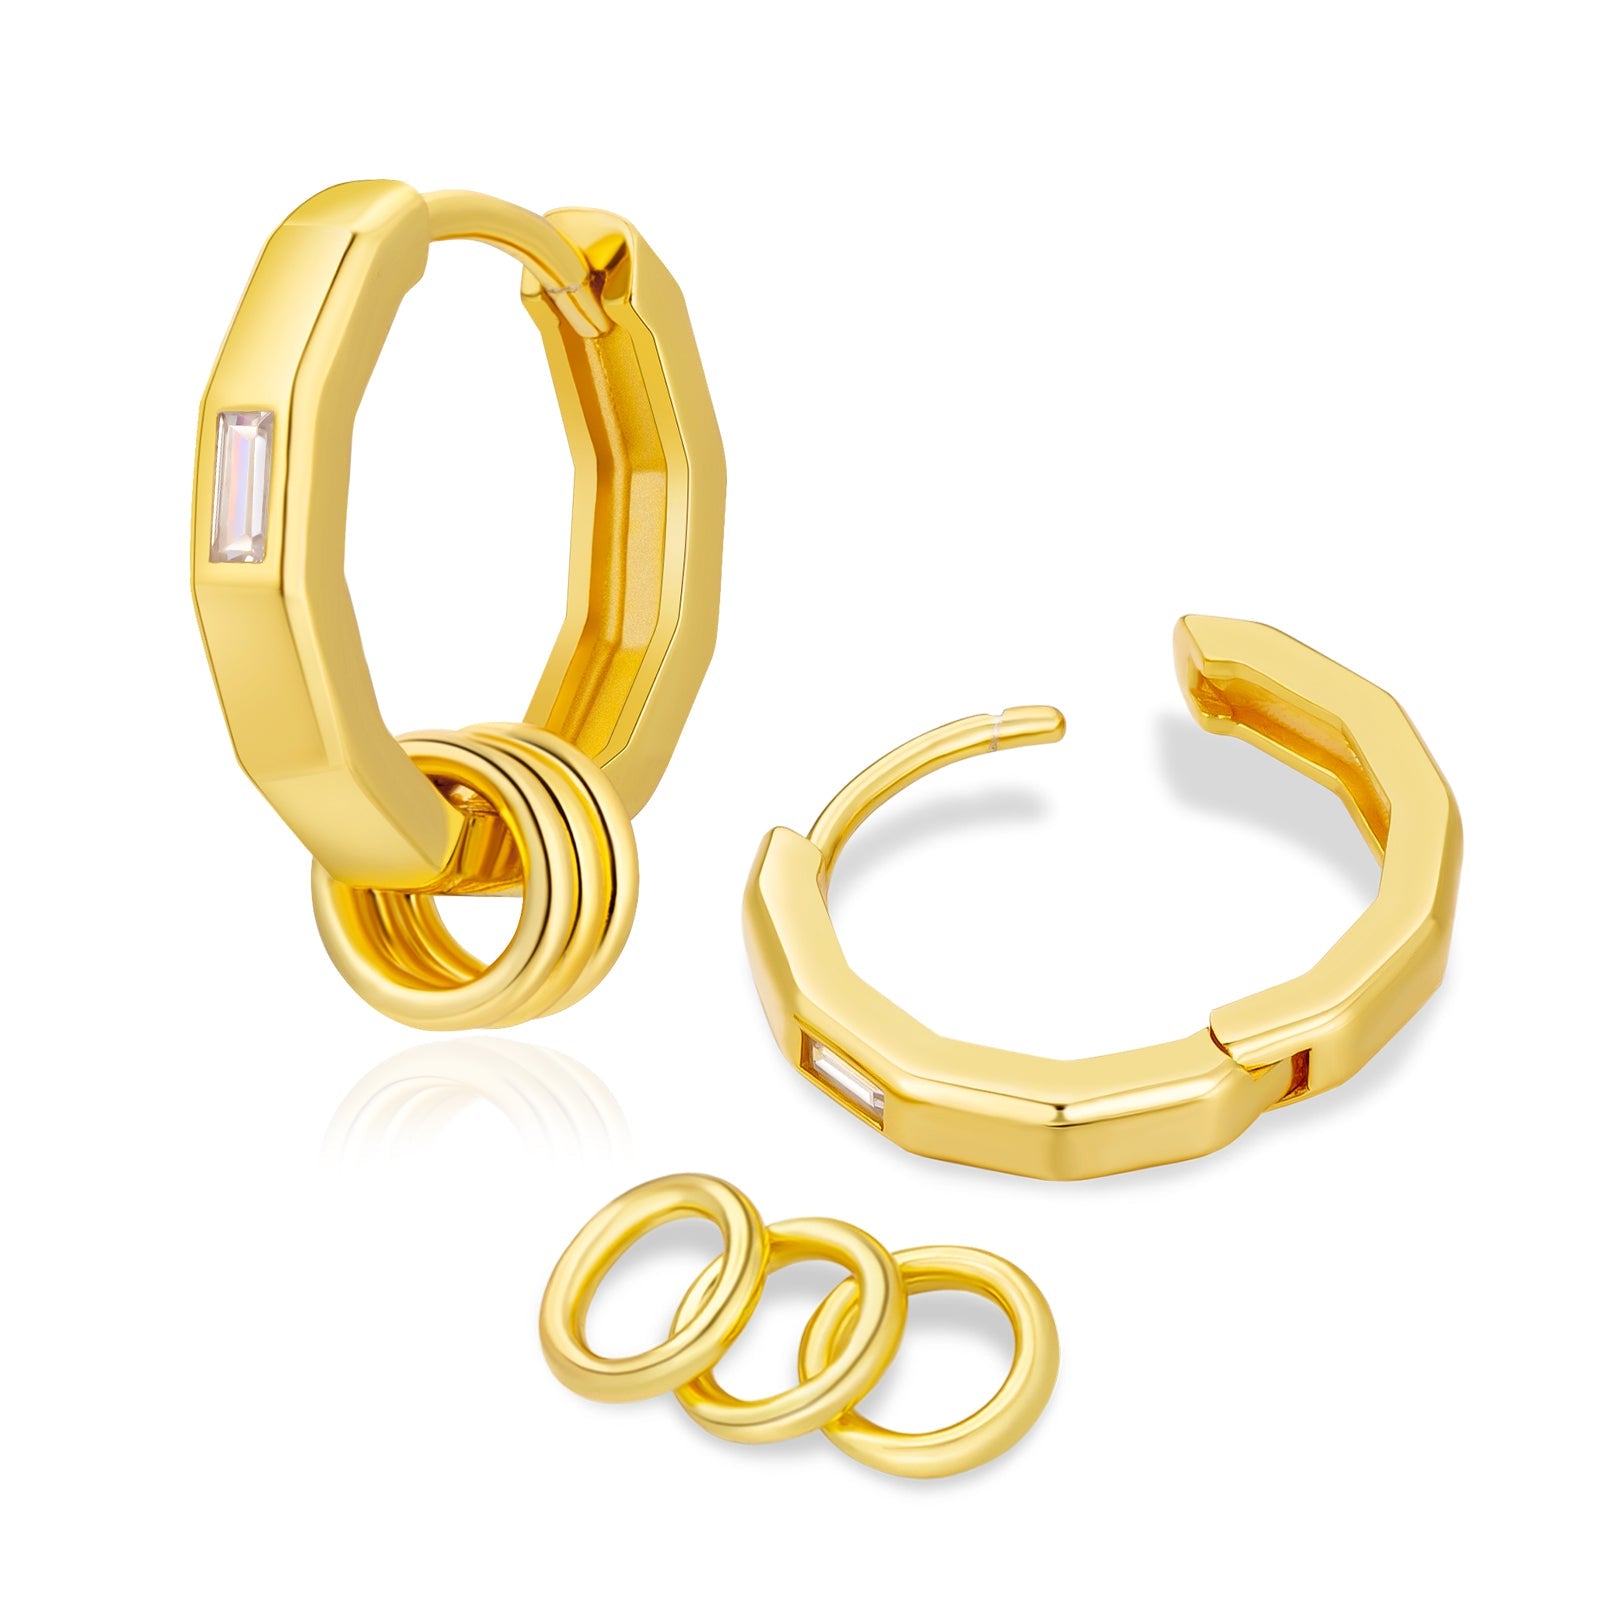 Wholesale Men's Earrings 15mm 2in1 Hoop Earrings Diamond Polygon with Detachable Rings 925 Sterling Silver